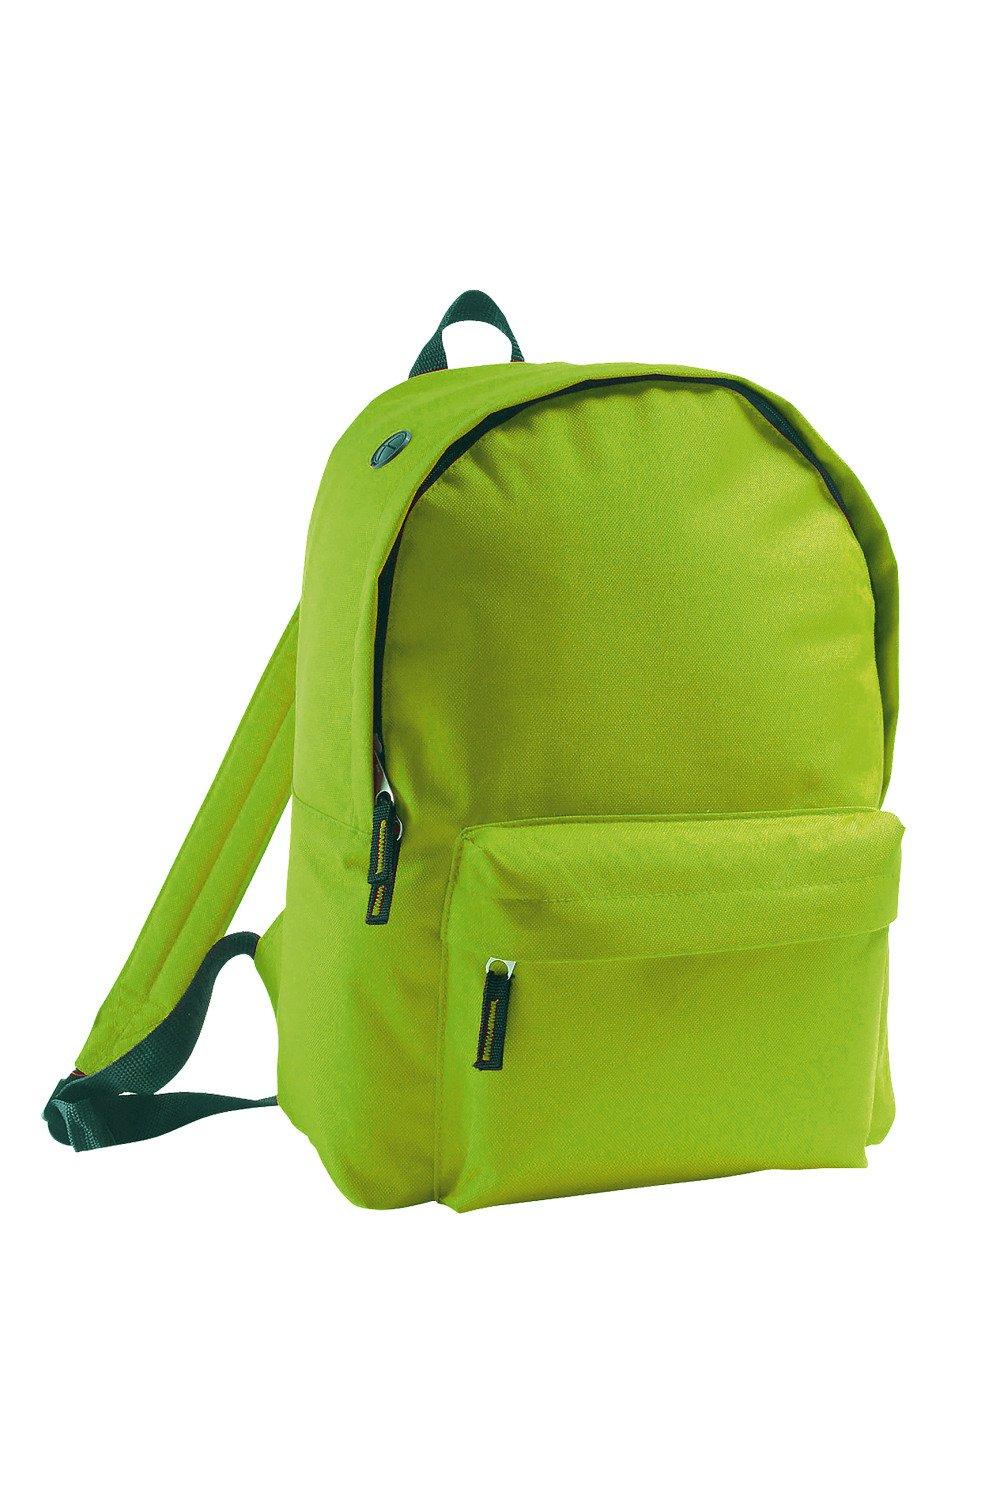 Рюкзак / сумка-рюкзак Rider SOL'S, зеленый рюкзак сумка рюкзак rider sol s золото